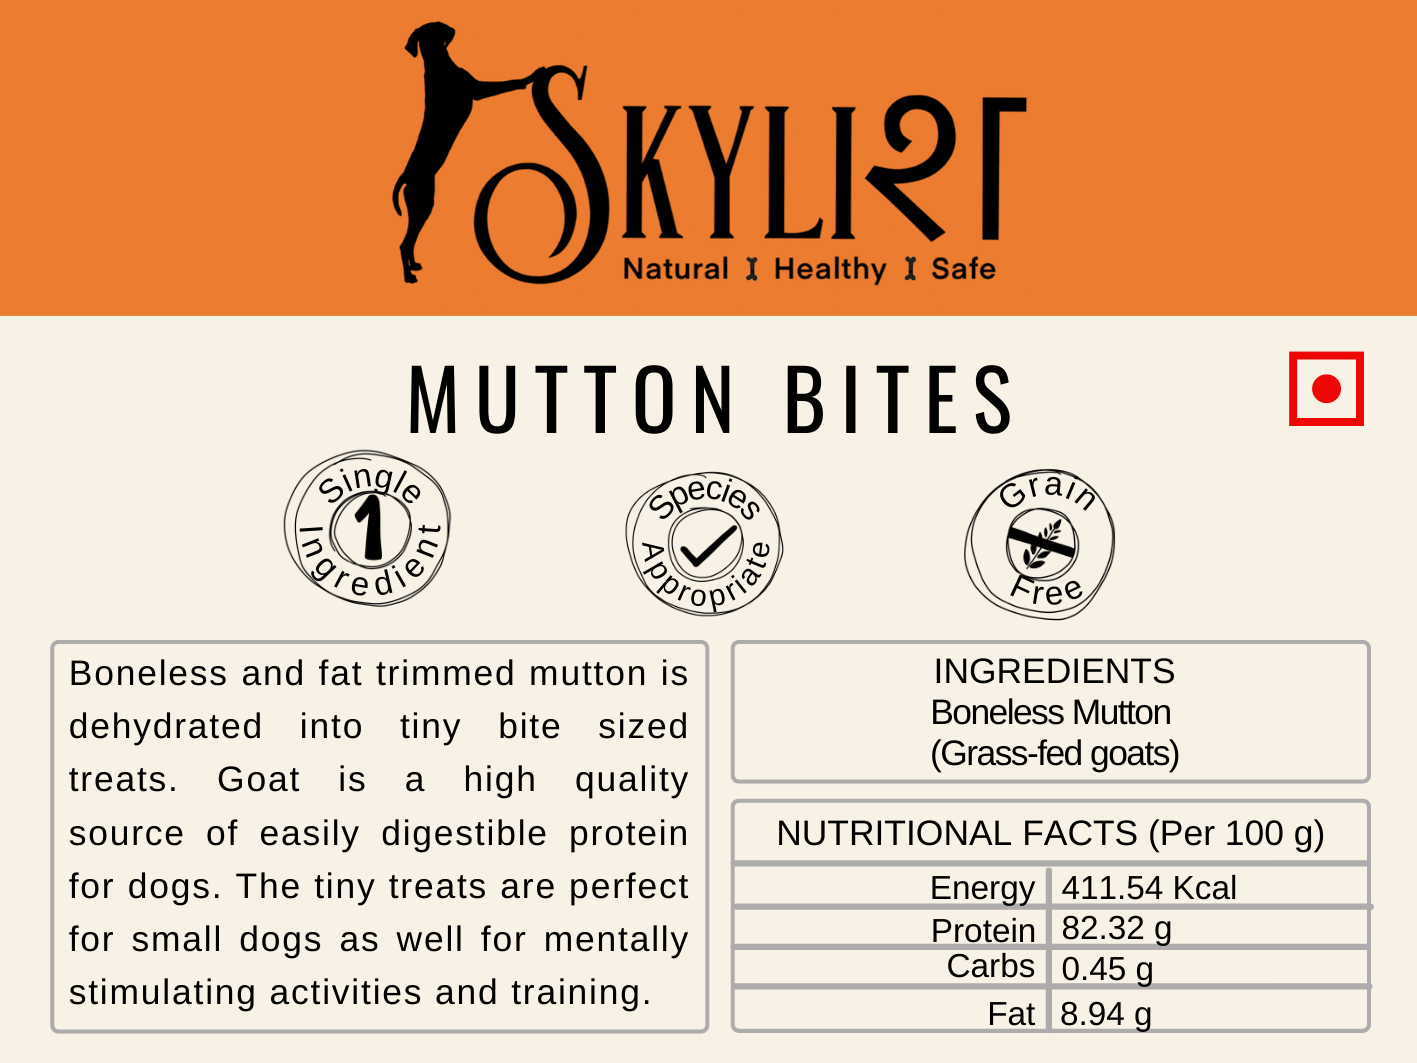 Skylish Mutton Bites